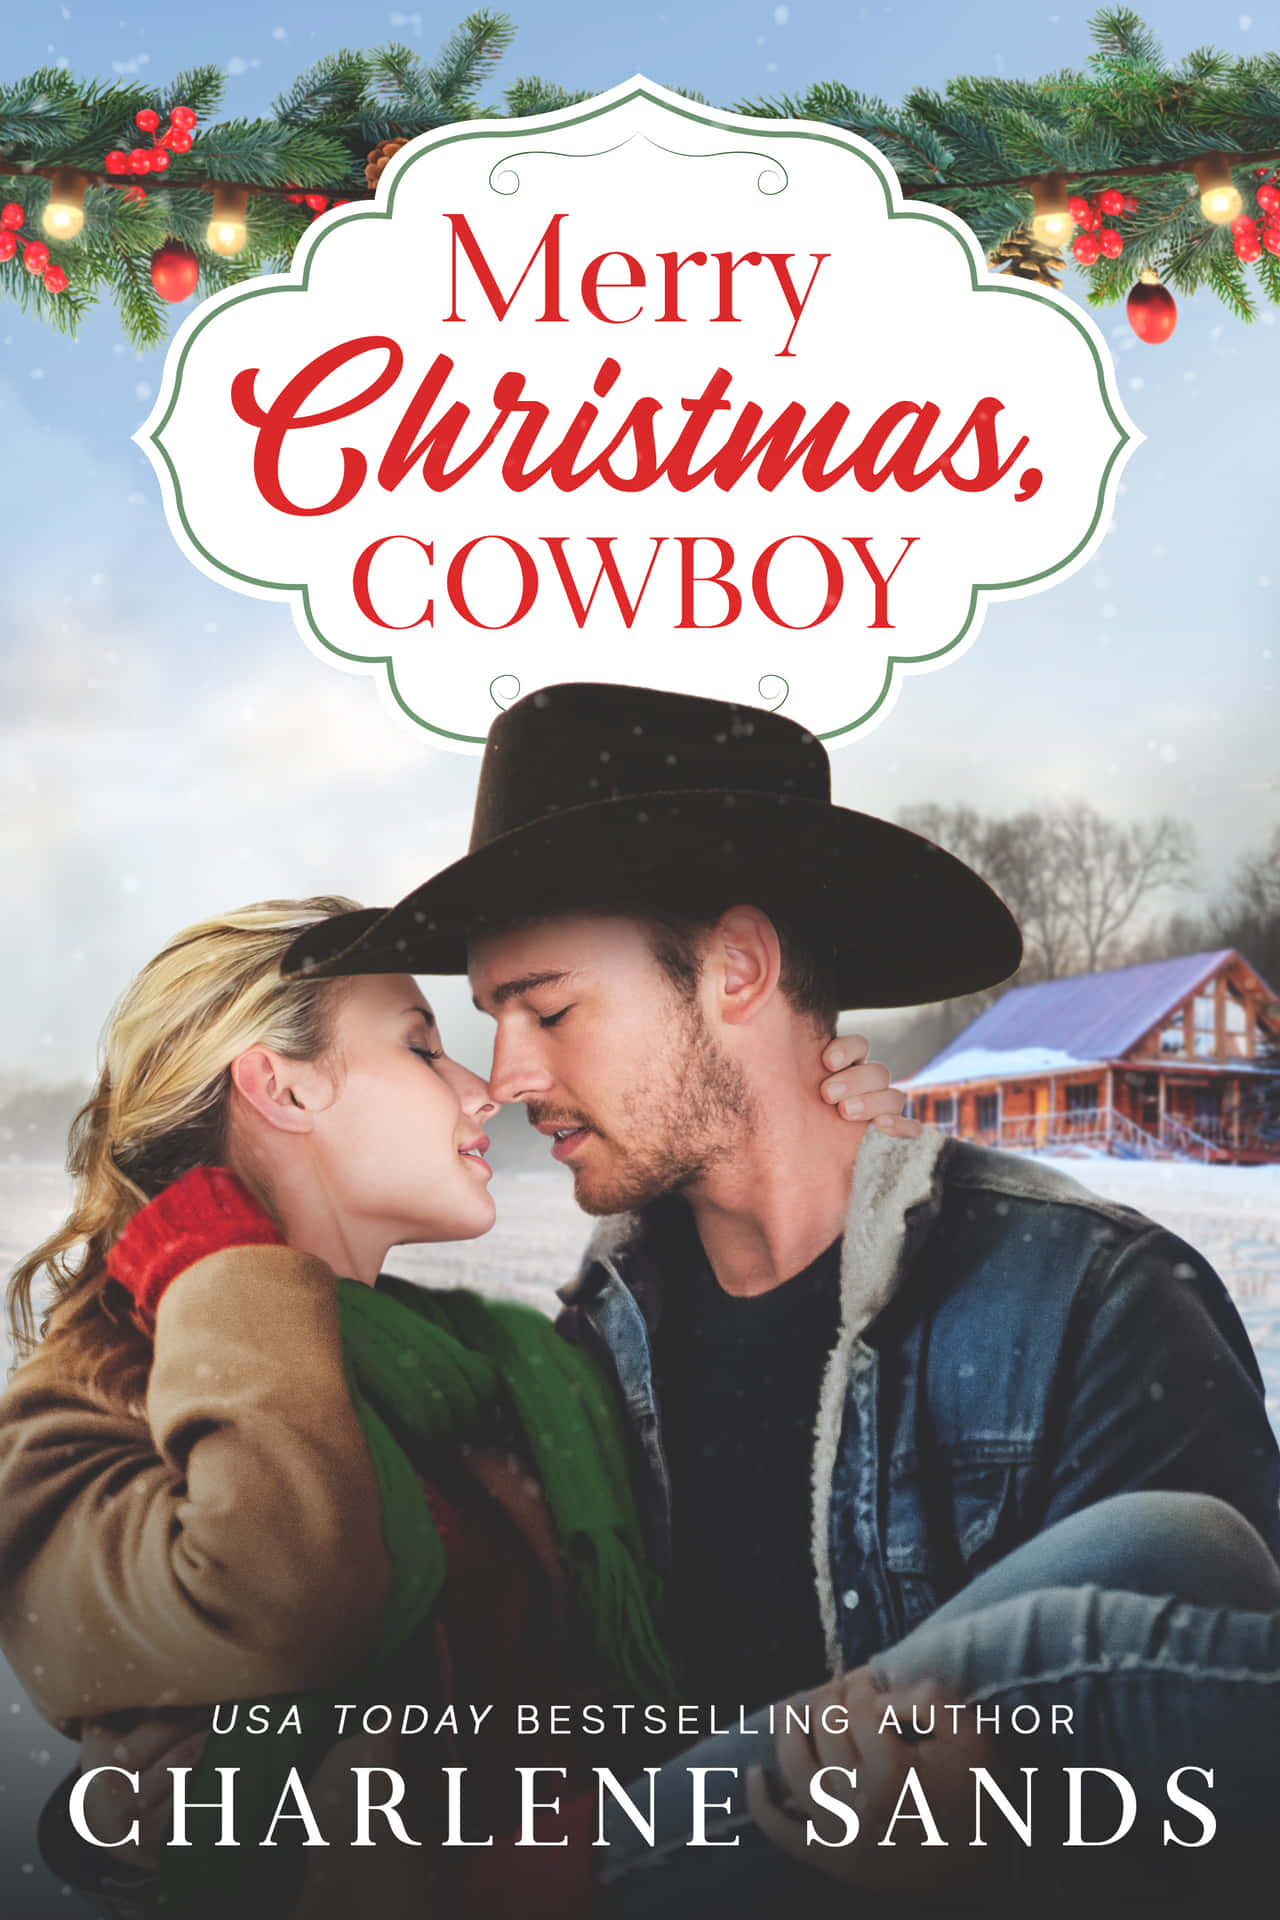 Celebrate Christmas the Cowboy Way! Wallpaper